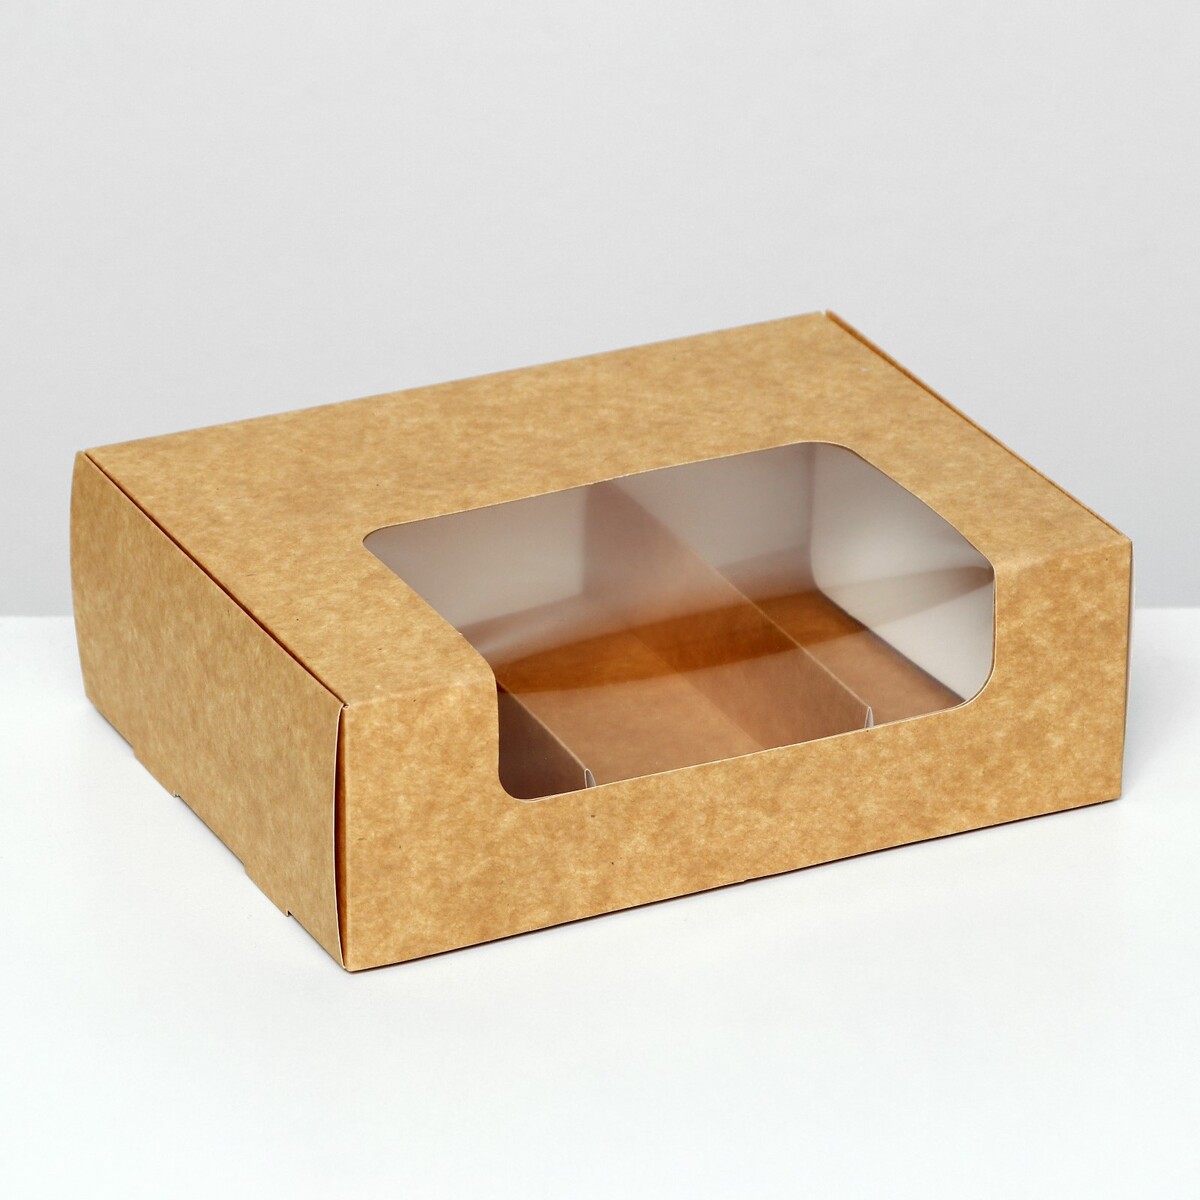 Коробка складная, под 3 эклера, крафт, 20 x 15 x 6 см коробка складная под 5 эклеров голубой 25 х 15 х 6 6 см